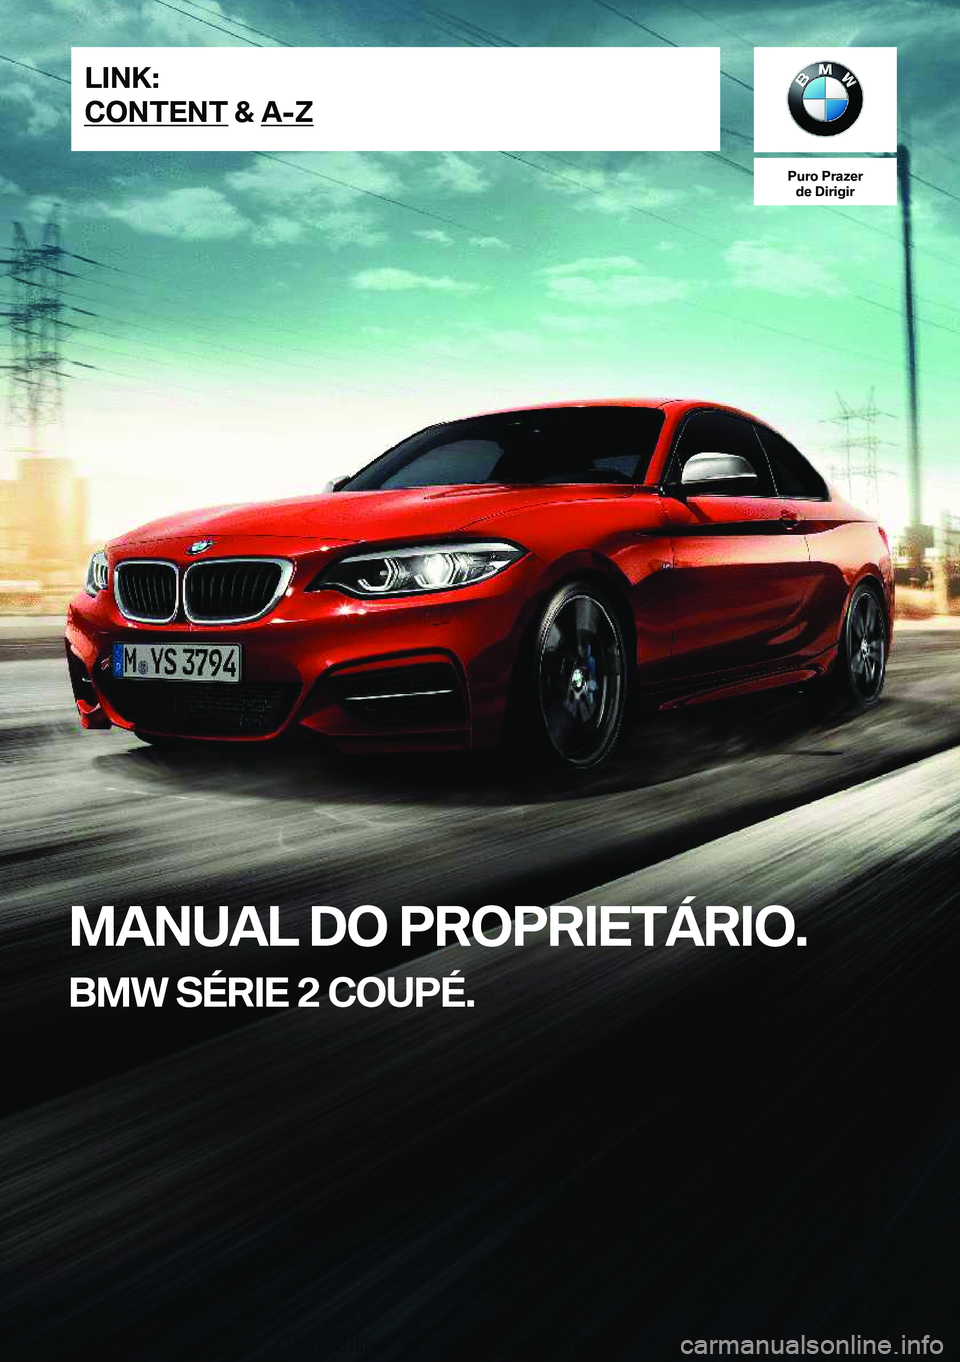 BMW 2 SERIES COUPE 2020  Manual do condutor (in Portuguese) �P�u�r�o��P�r�a�z�e�r�d�e��D�i�r�i�g�i�r
�M�A�N�U�A�L��D�O��P�R�O�P�R�I�E�T�Á�R�I�O�.
�B�M�W��S�